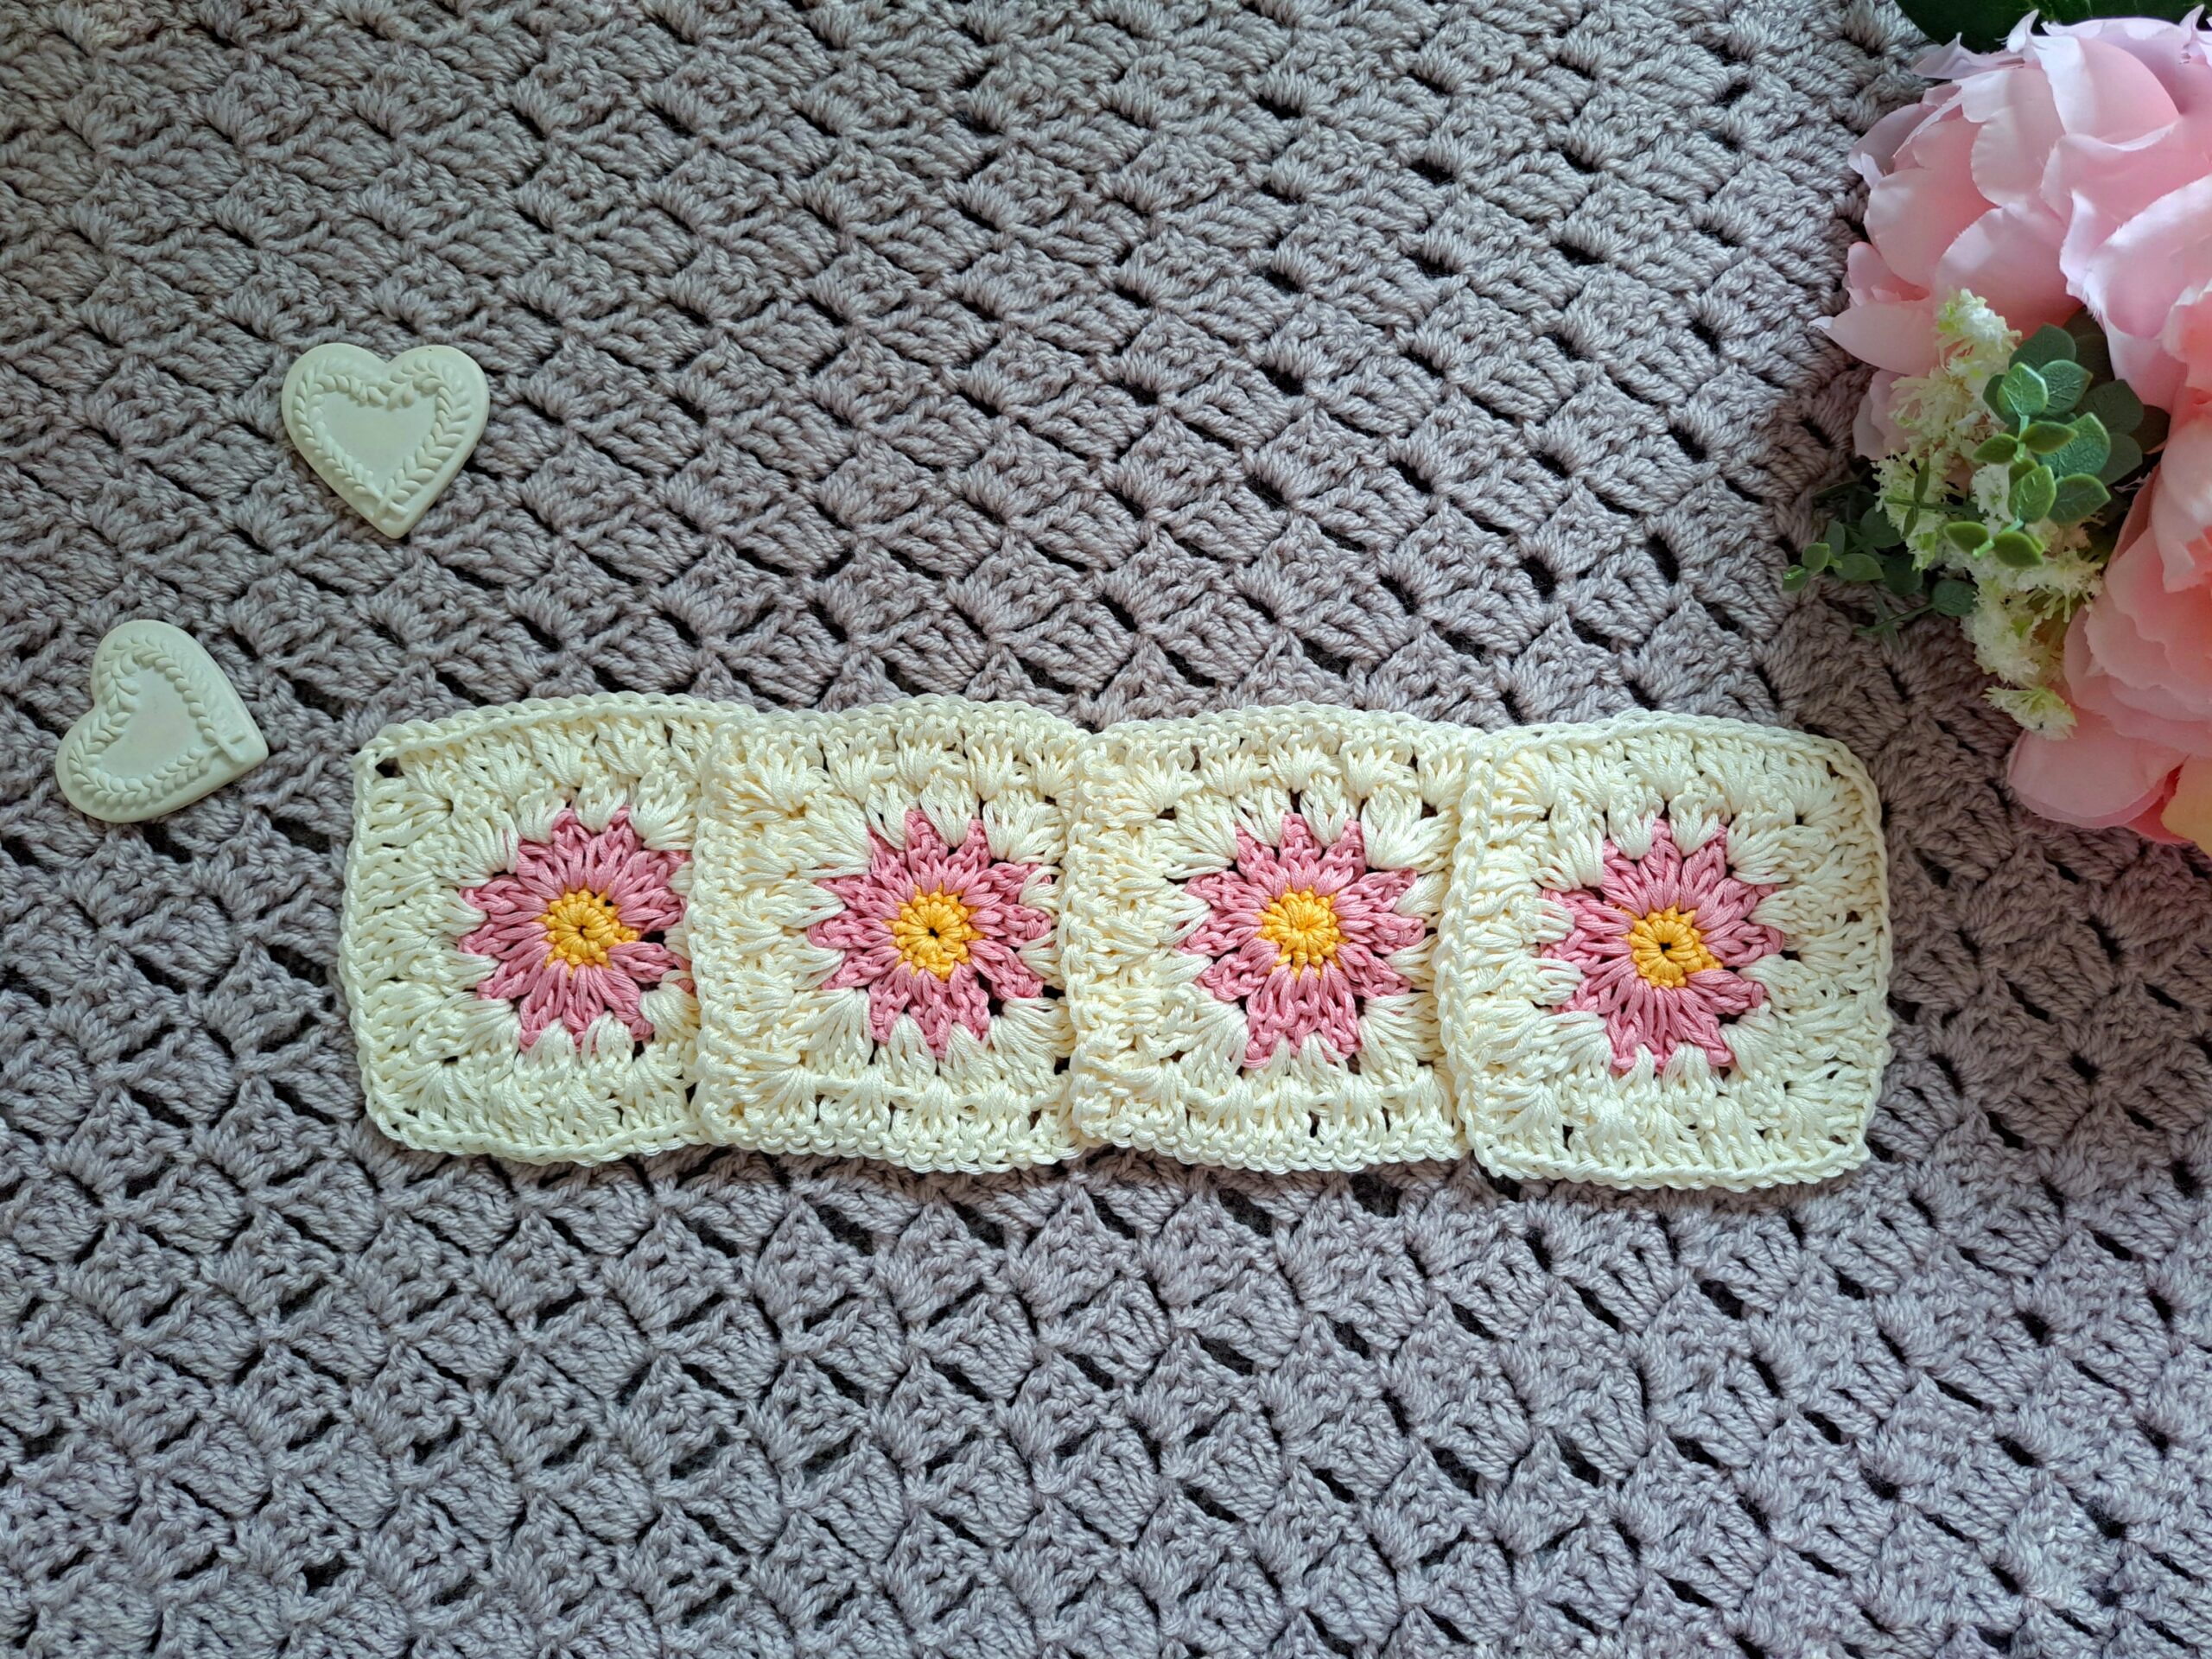 Crochet Flower Granny Square Free Pattern